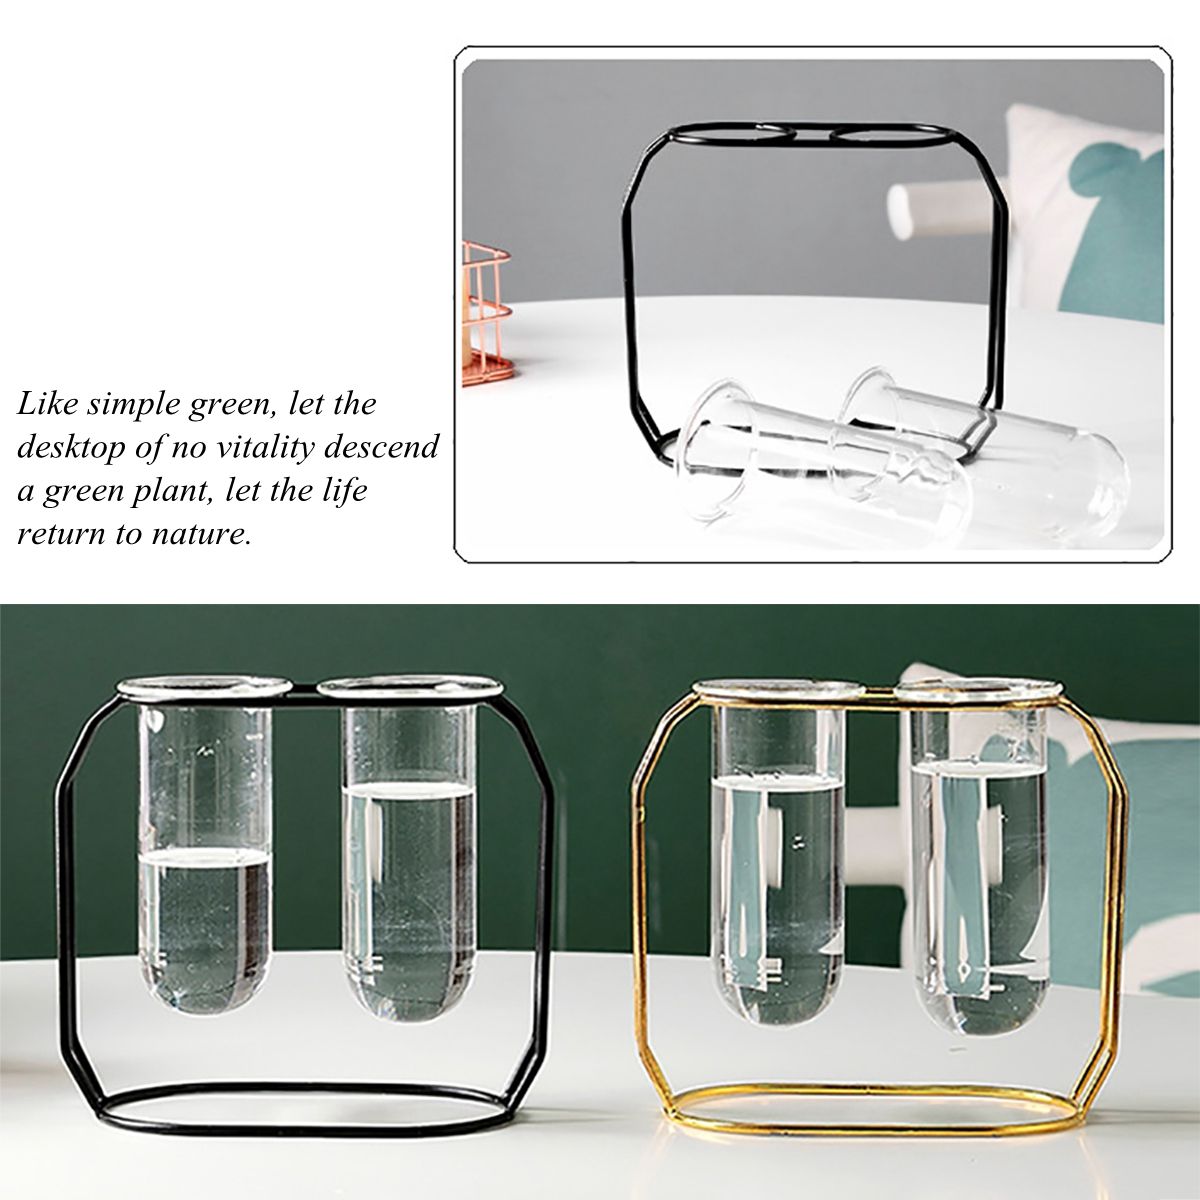 Nordic-Glass-Planter-Test-Tube-Vase-Pot-Retro-Iron-Stand-Plants-Flowers-Holder-1762958